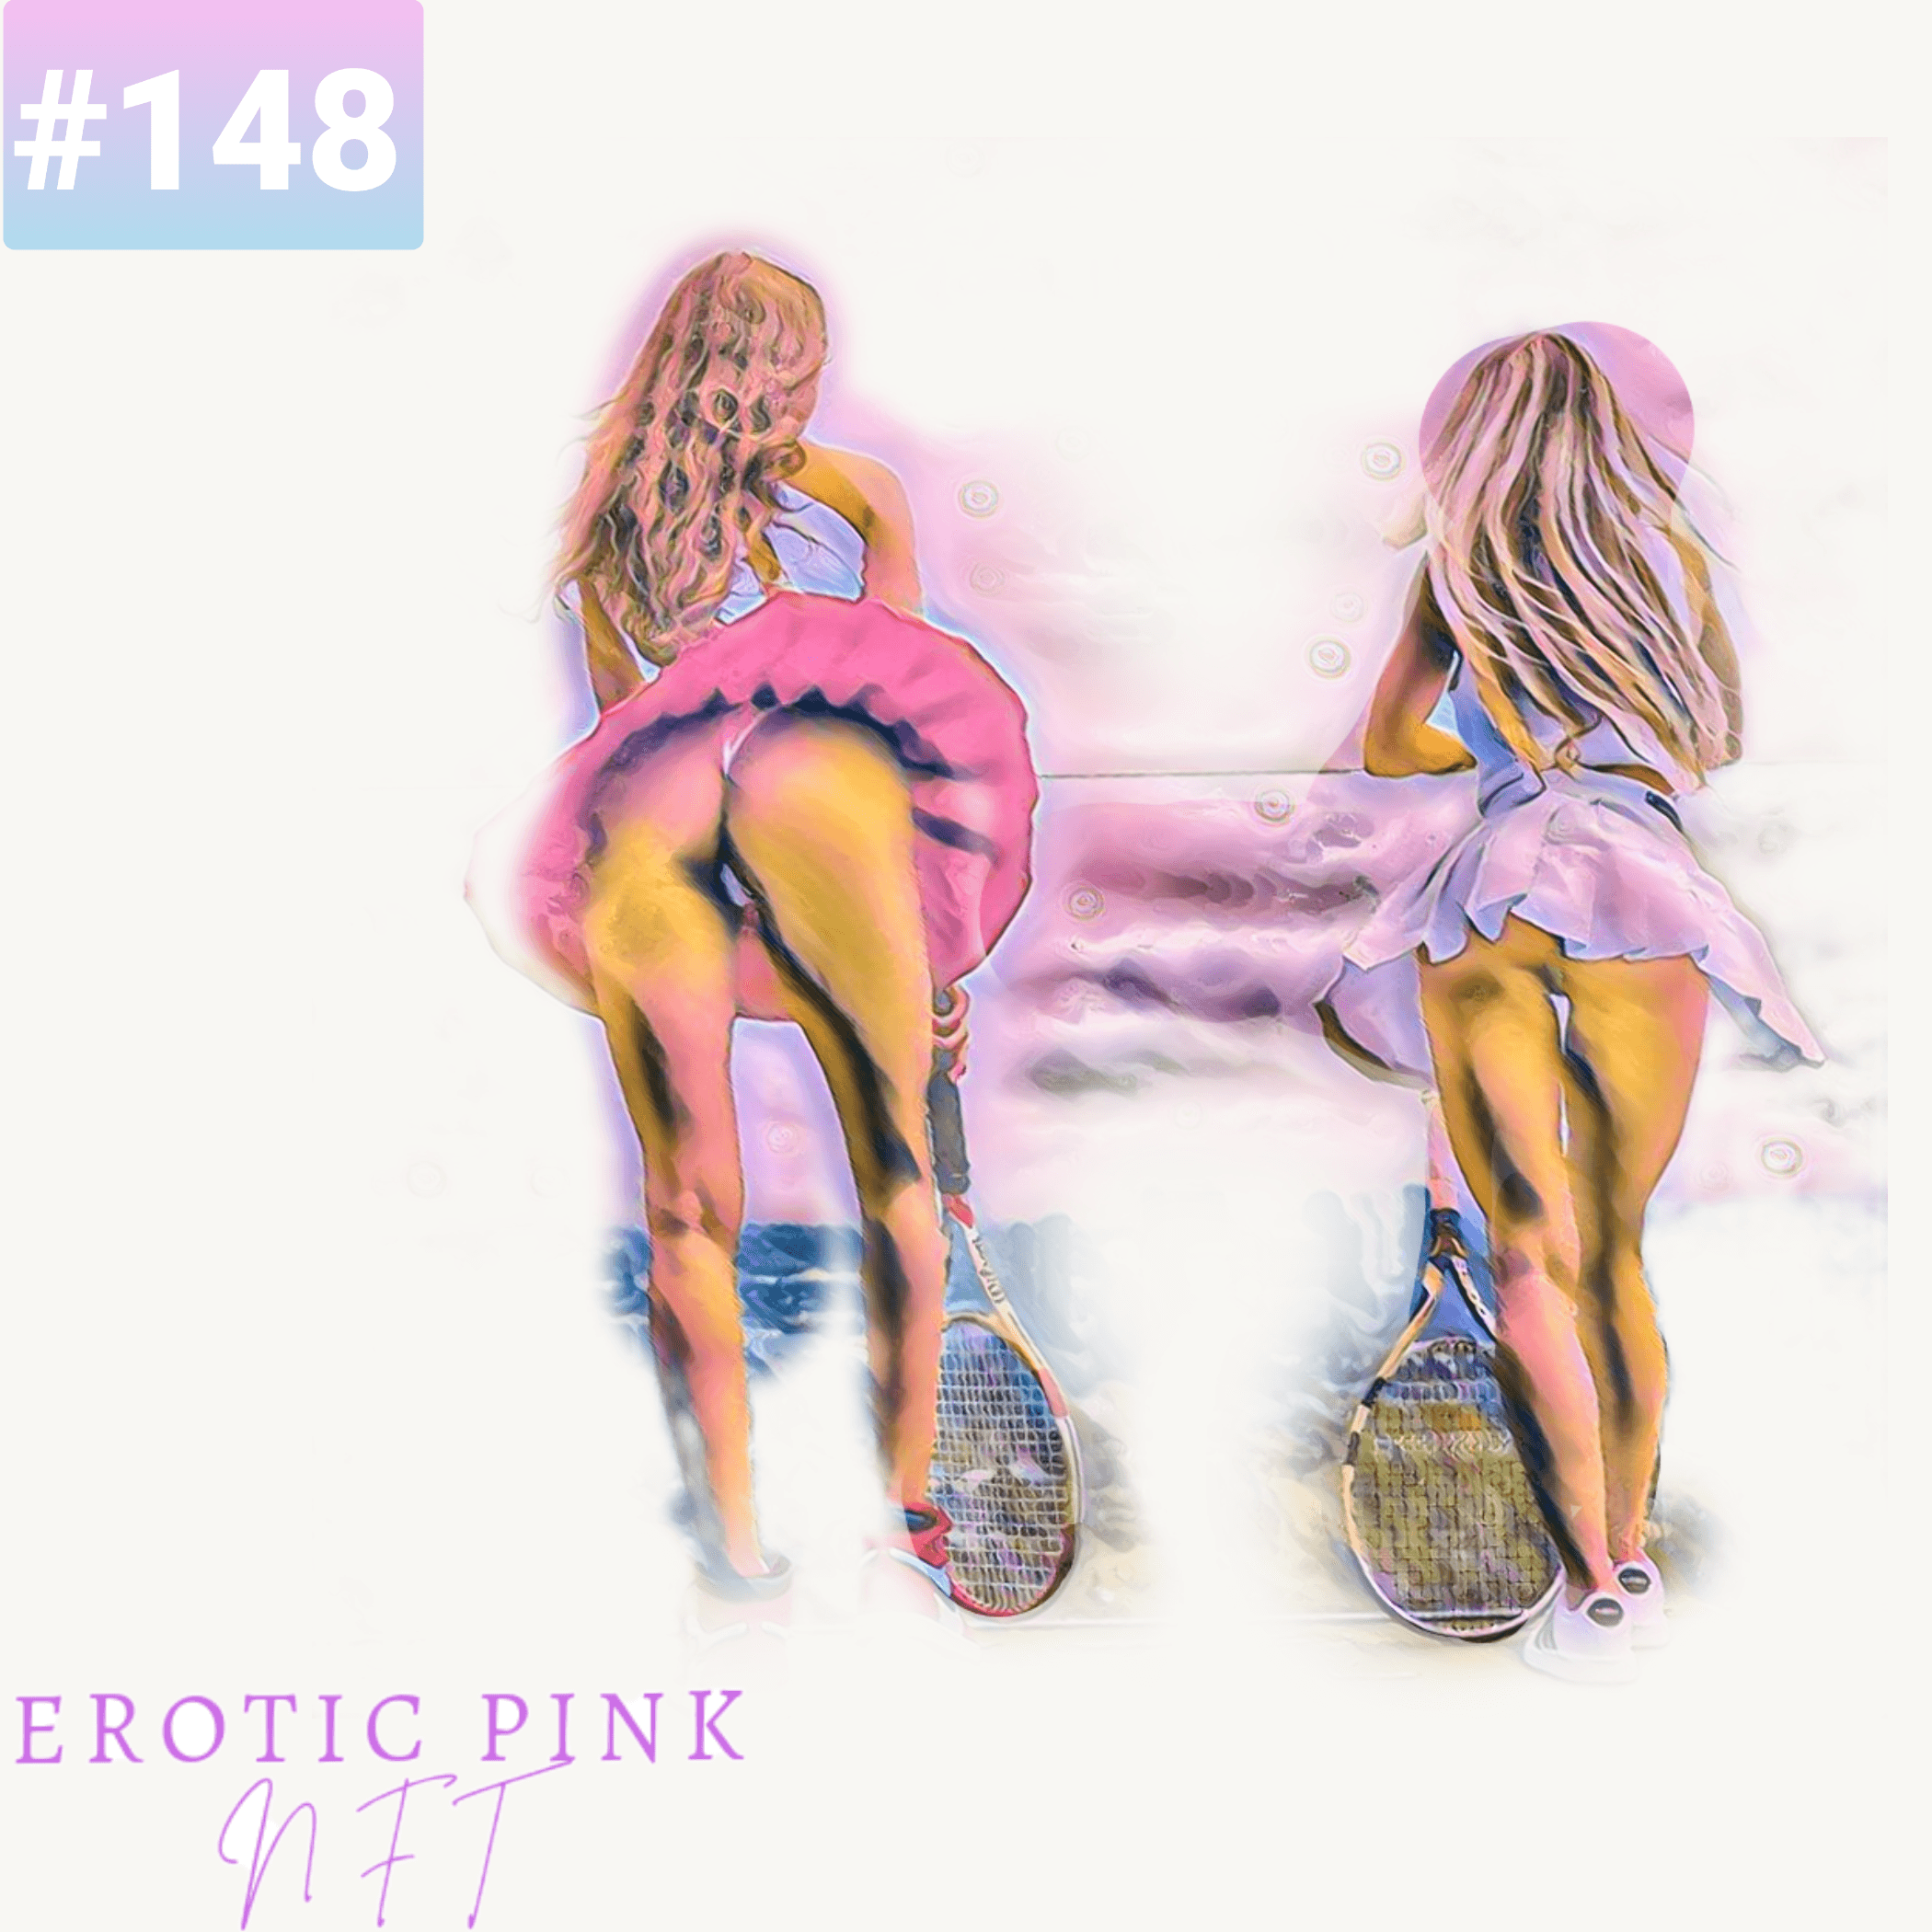 Erotic Pink #148